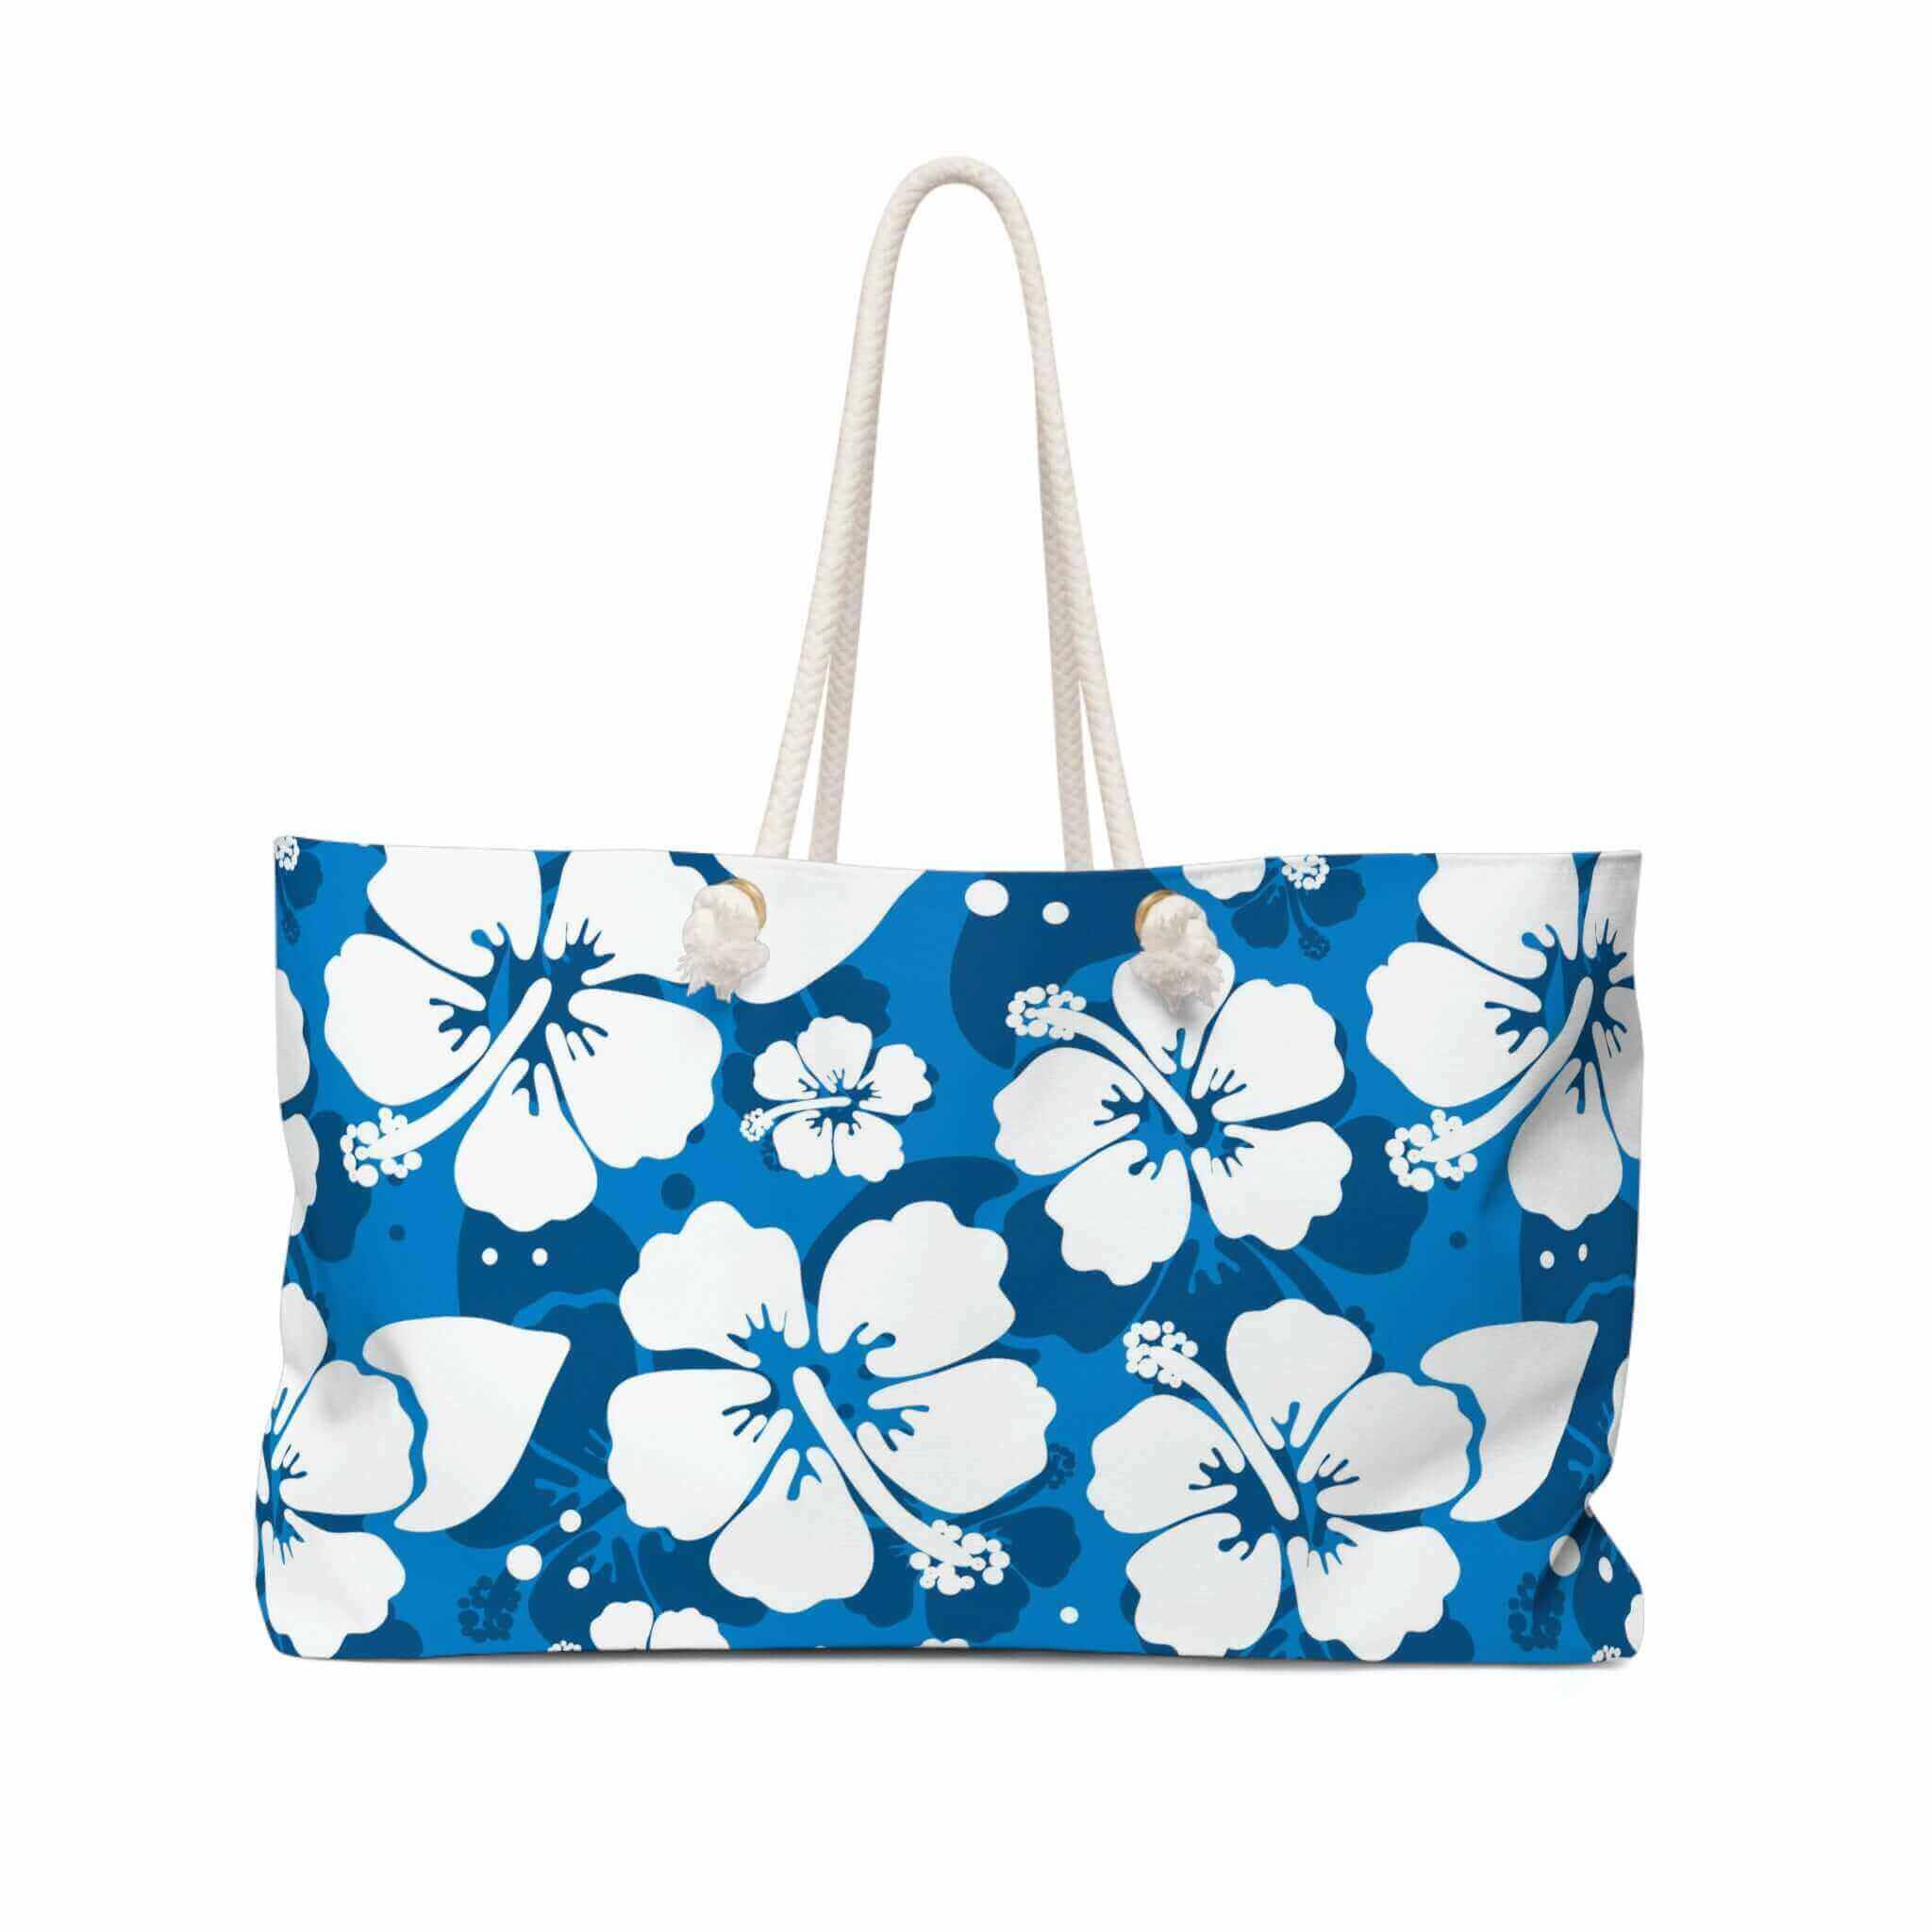 The Perfect Beach Bag - Blue Hawaiian - 1